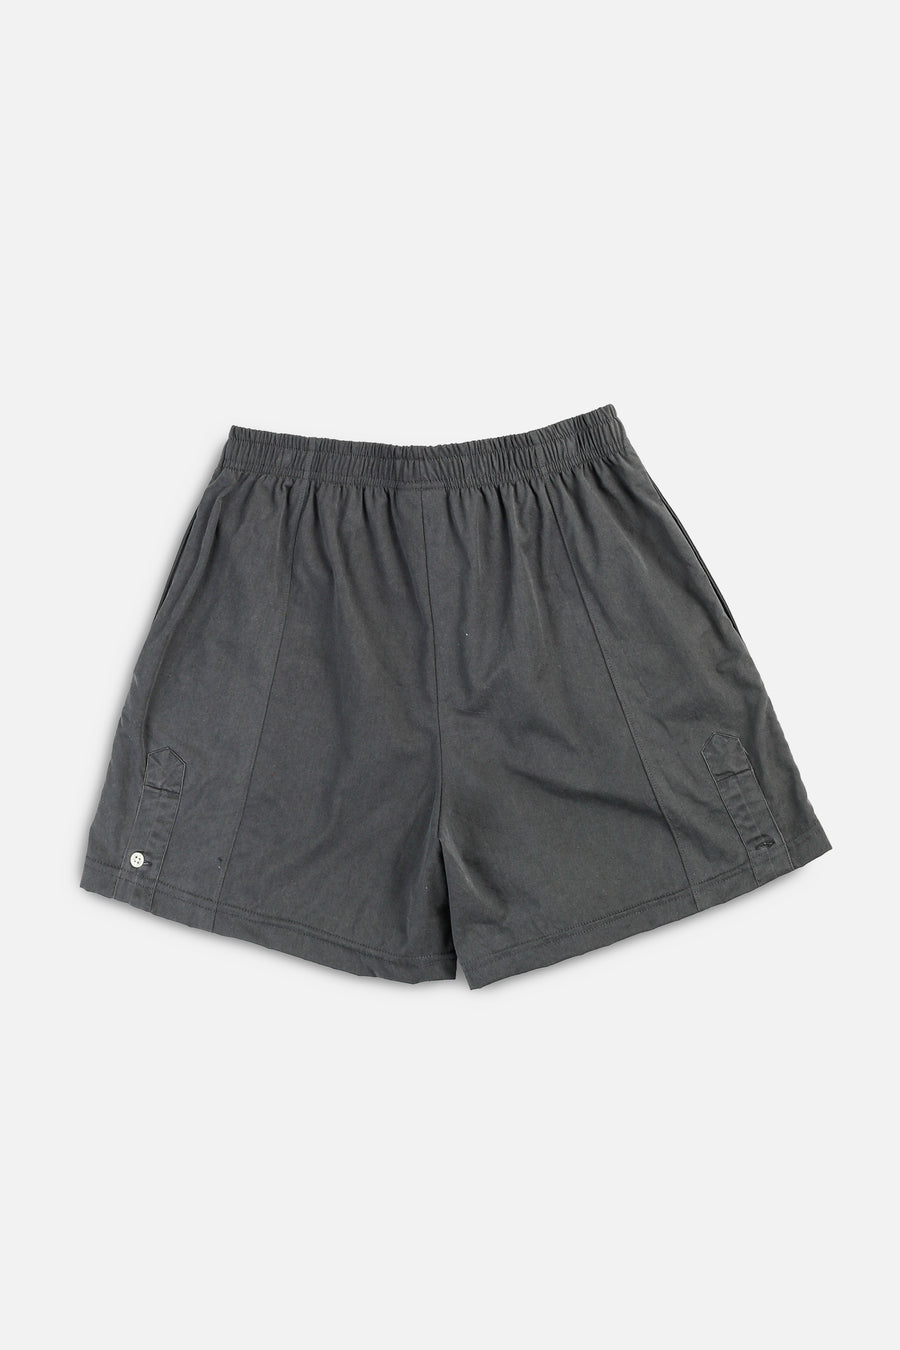 Unisex Rework Oxford Boxer Shorts - S